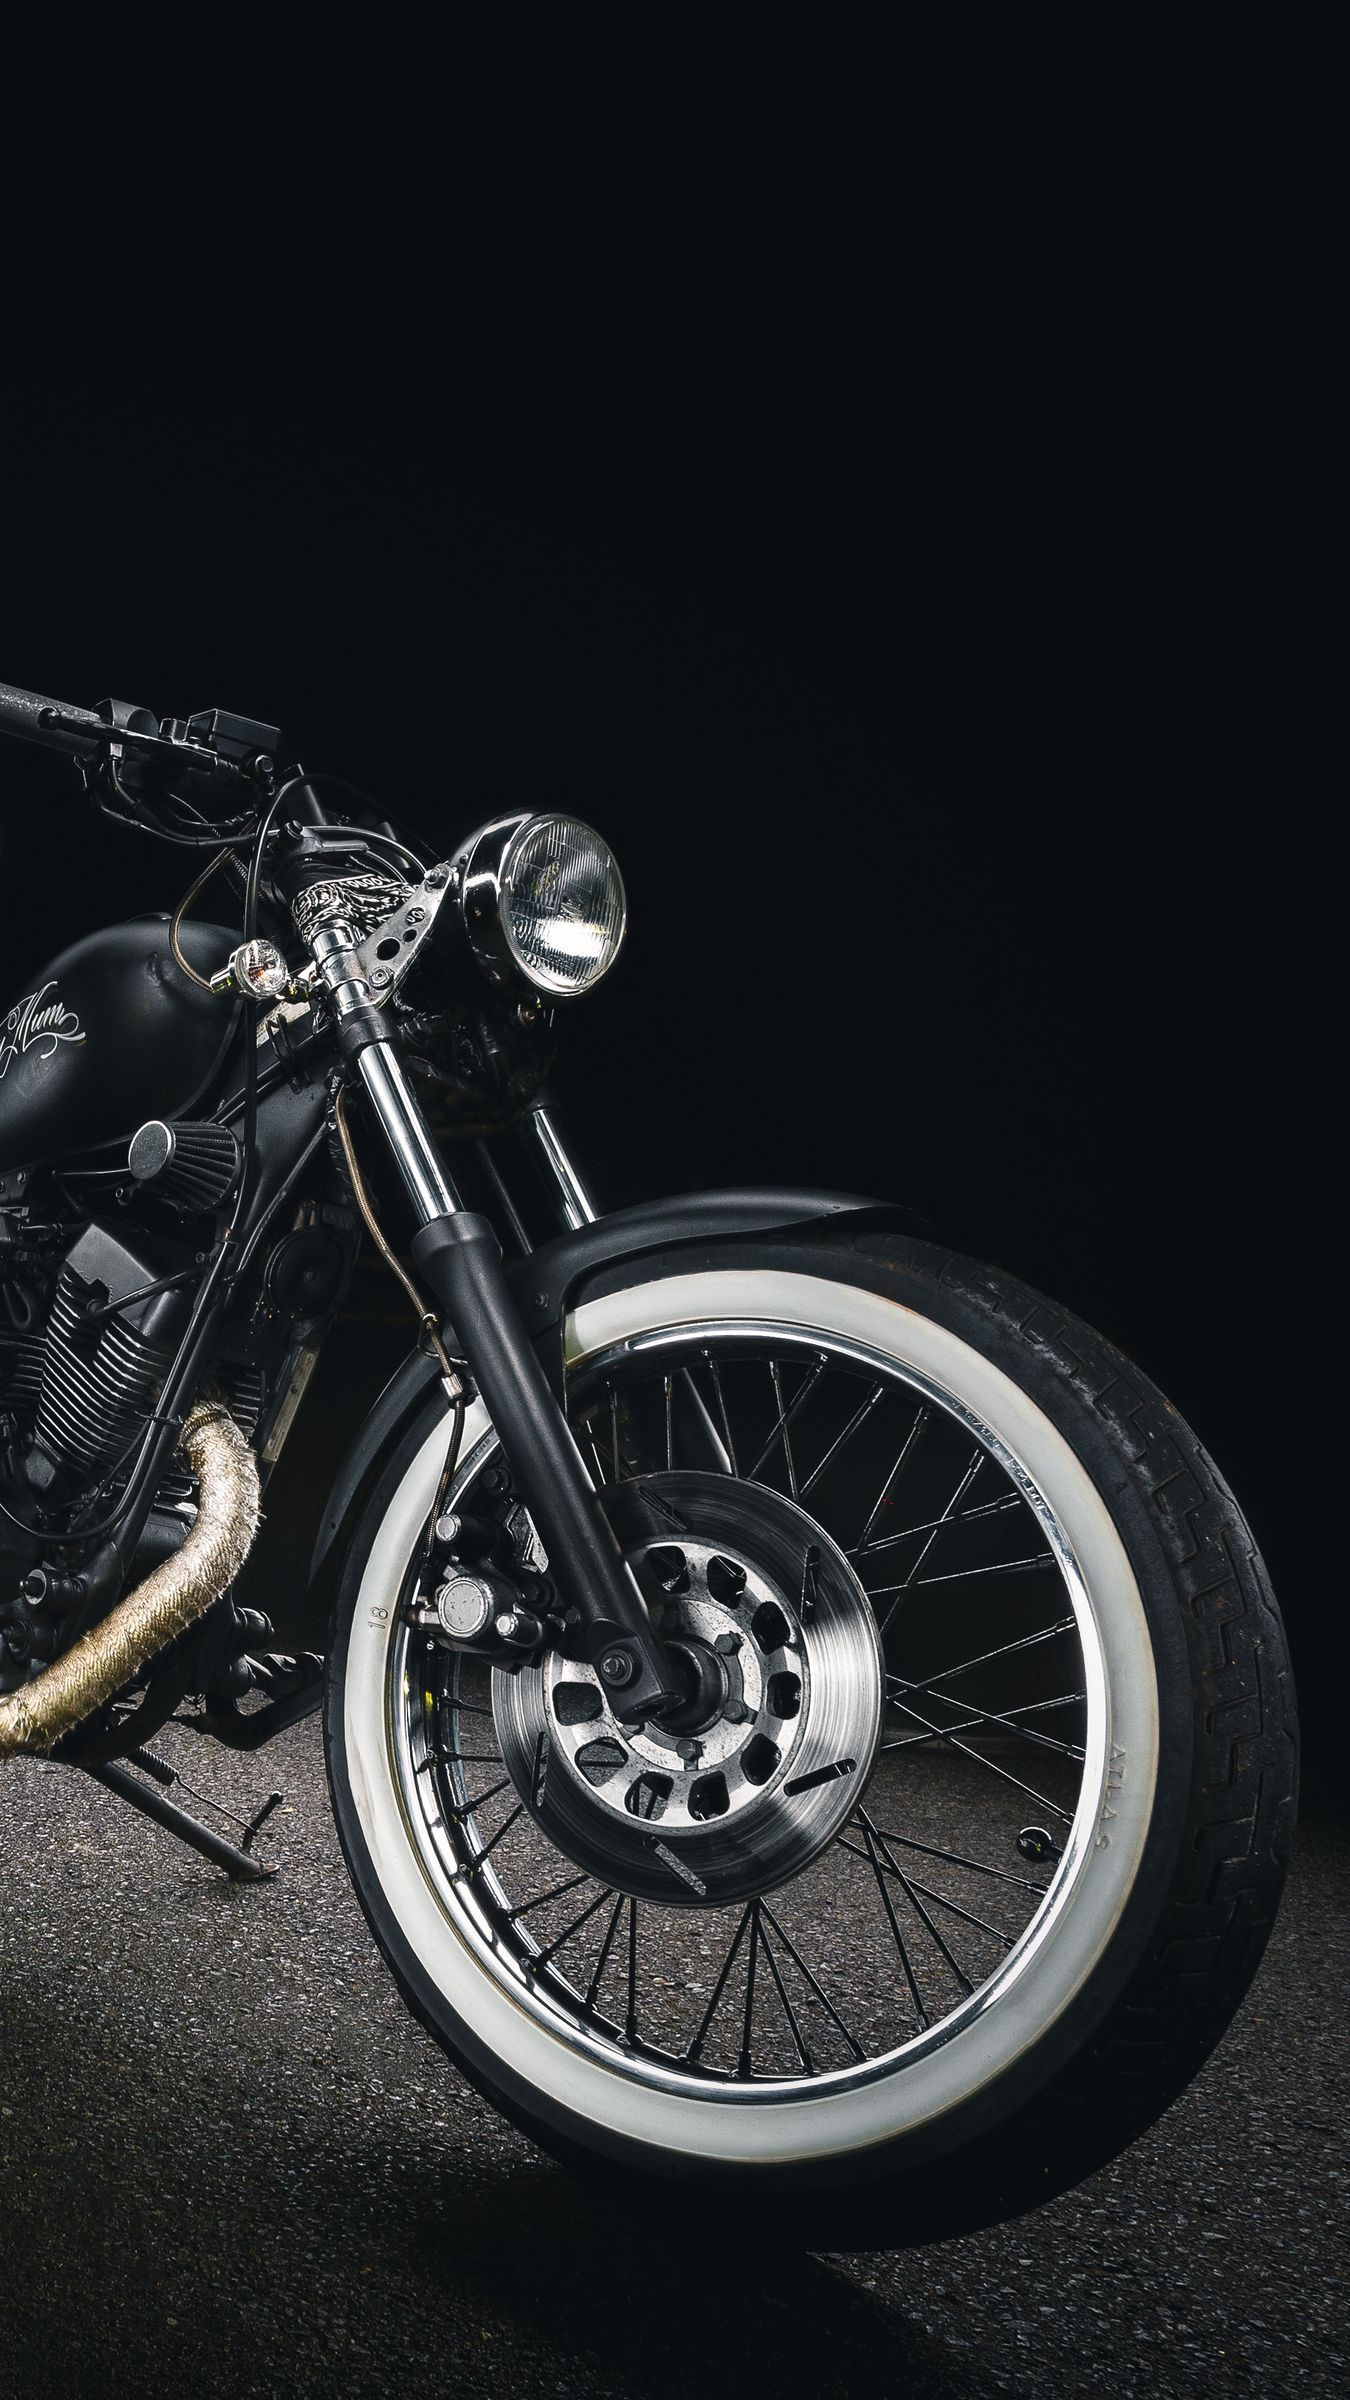 Download wallpaper 1350x2400 motorcycle, bike, wheel iphone 8+